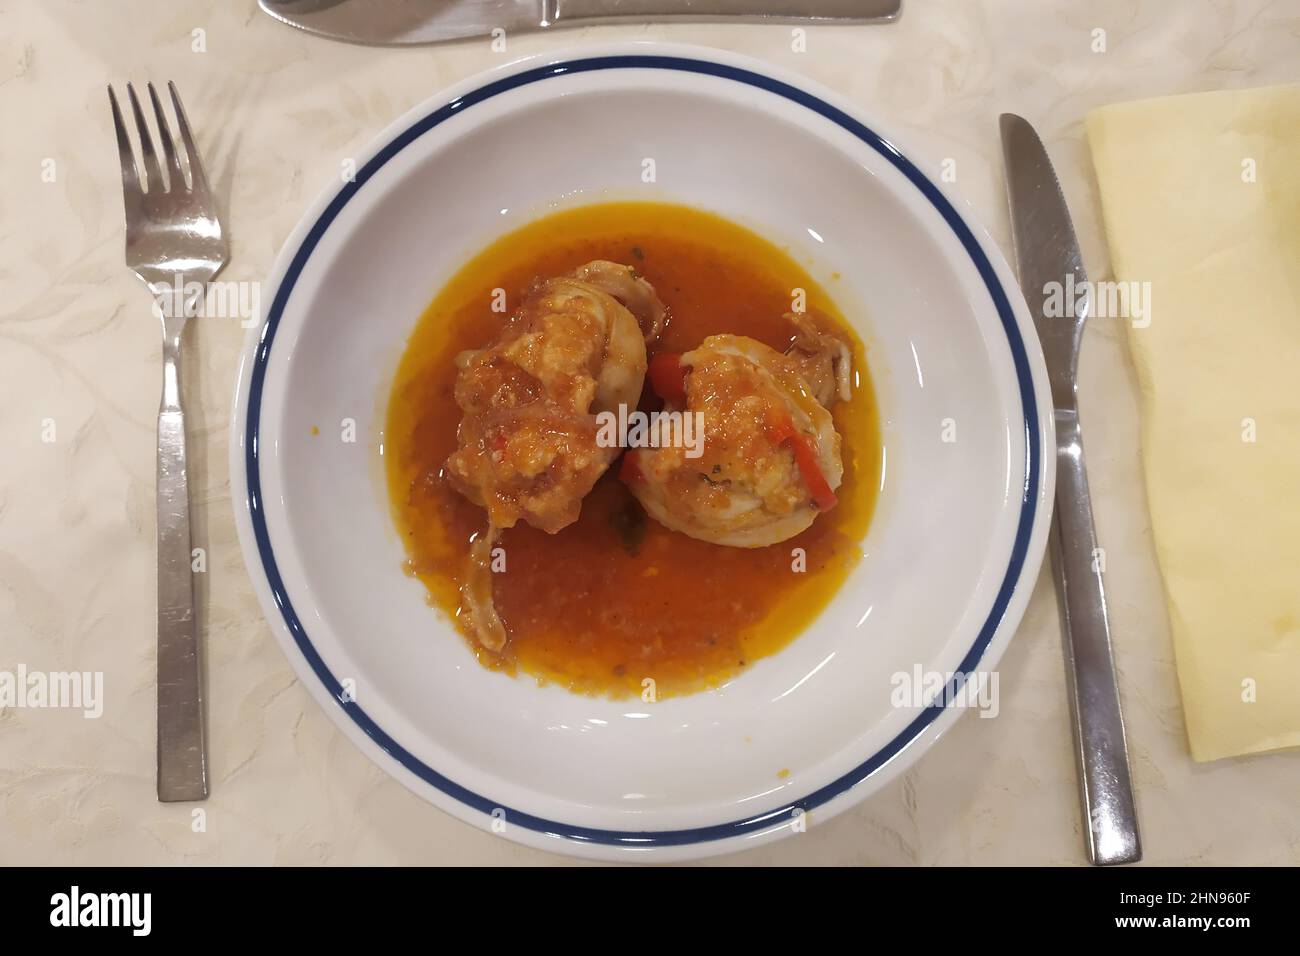 Food, Second dish, Cuttlefish Stock Photo